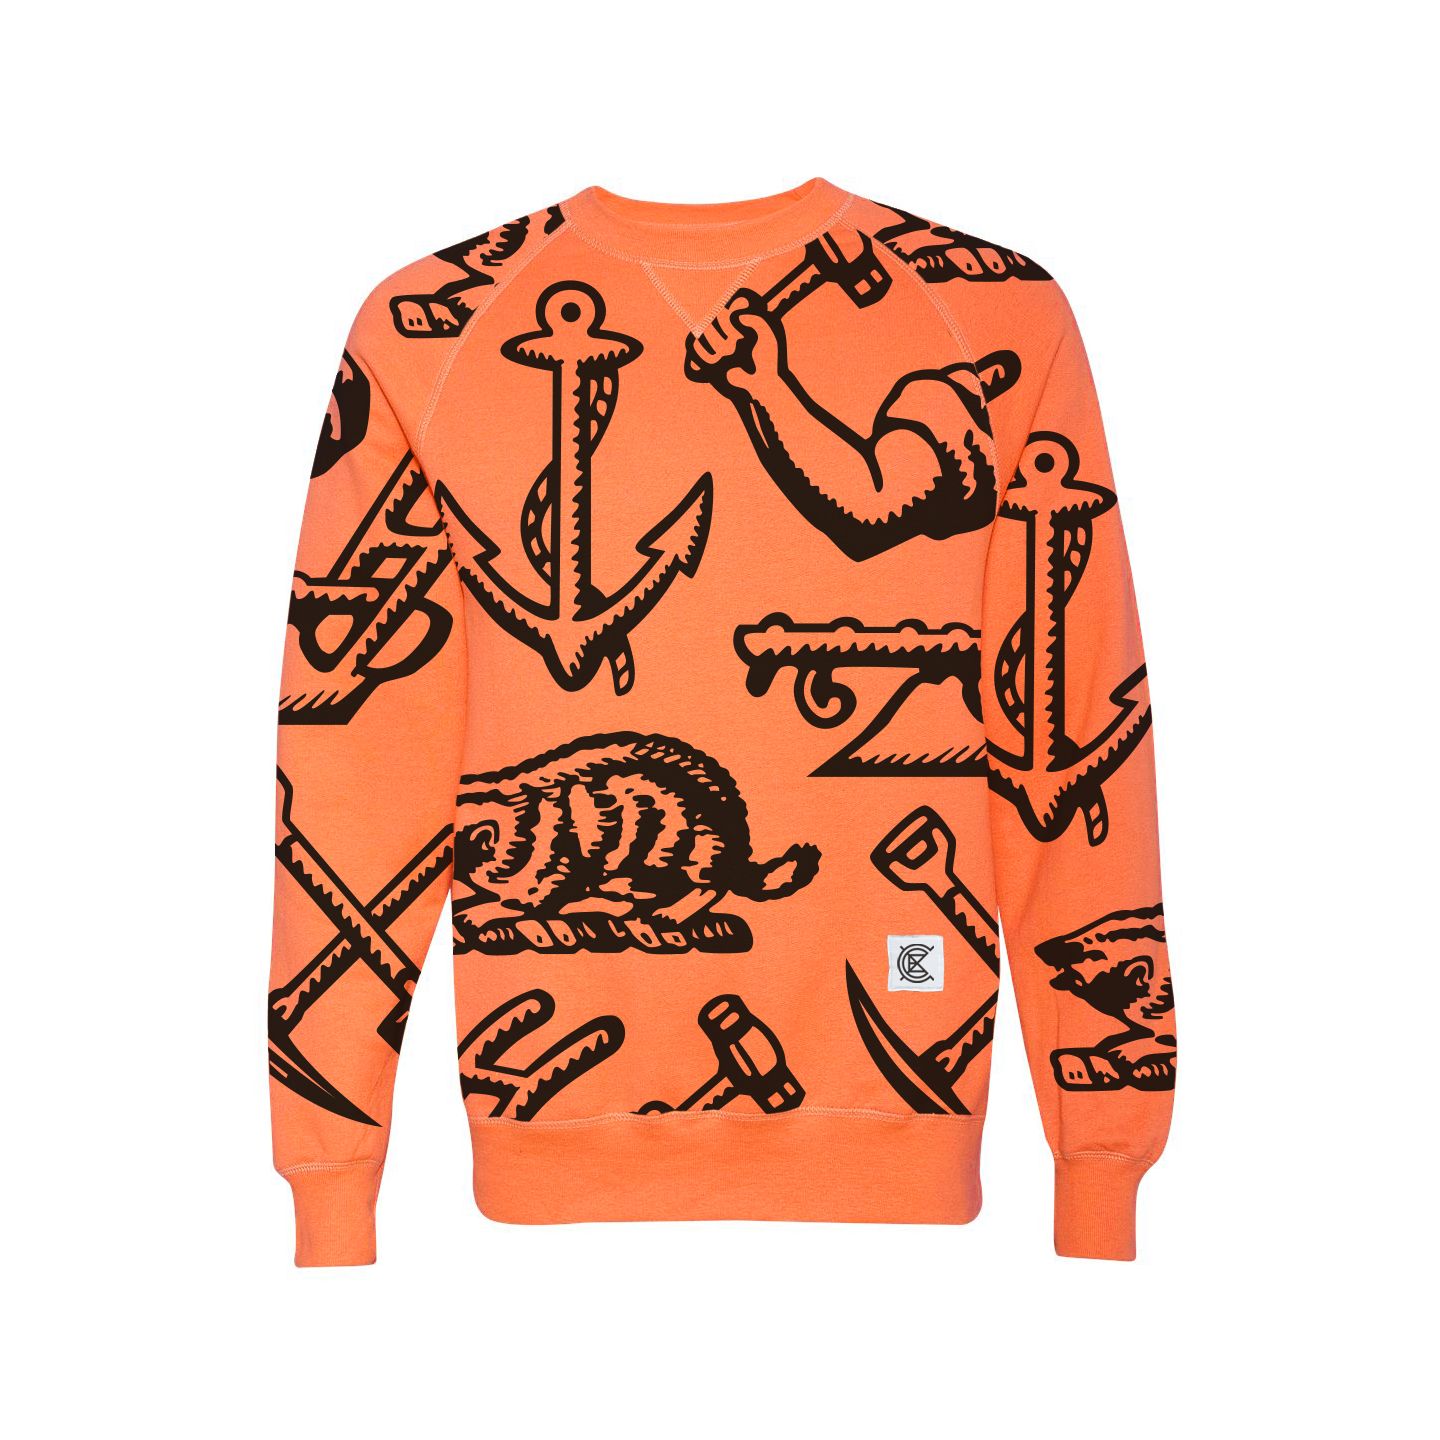 vuitton tiger sweater